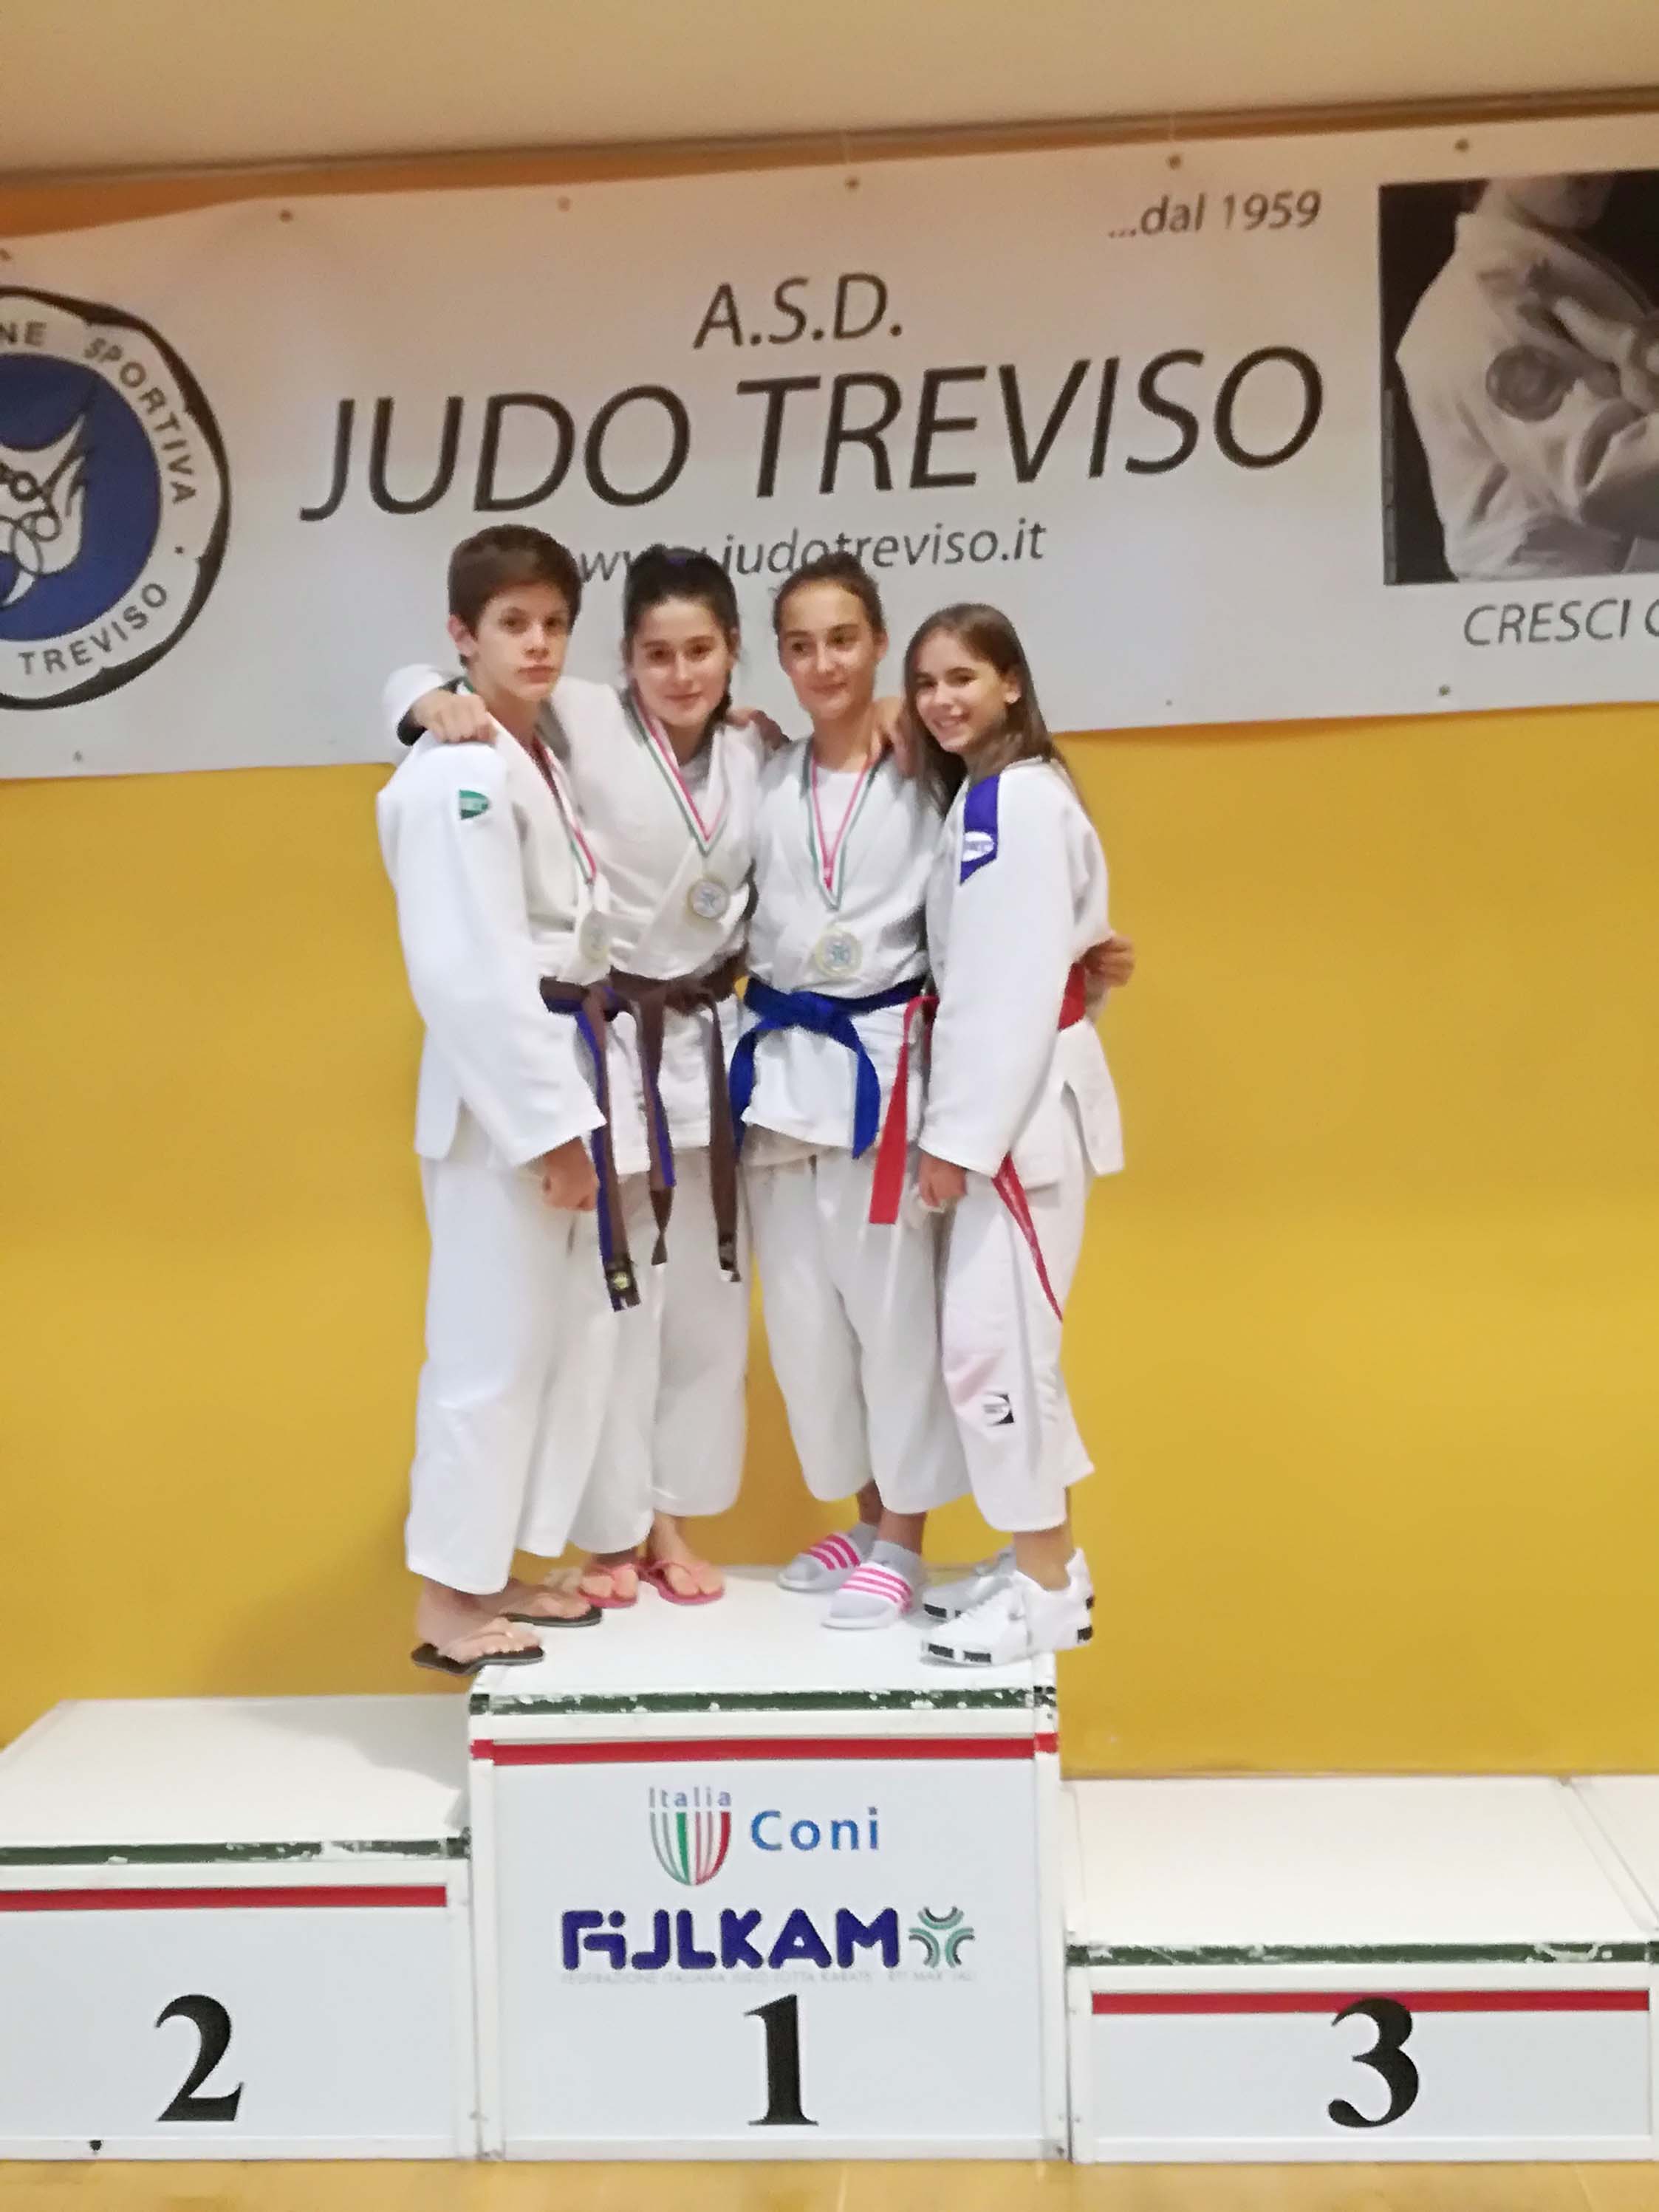 Judo TV finalisti